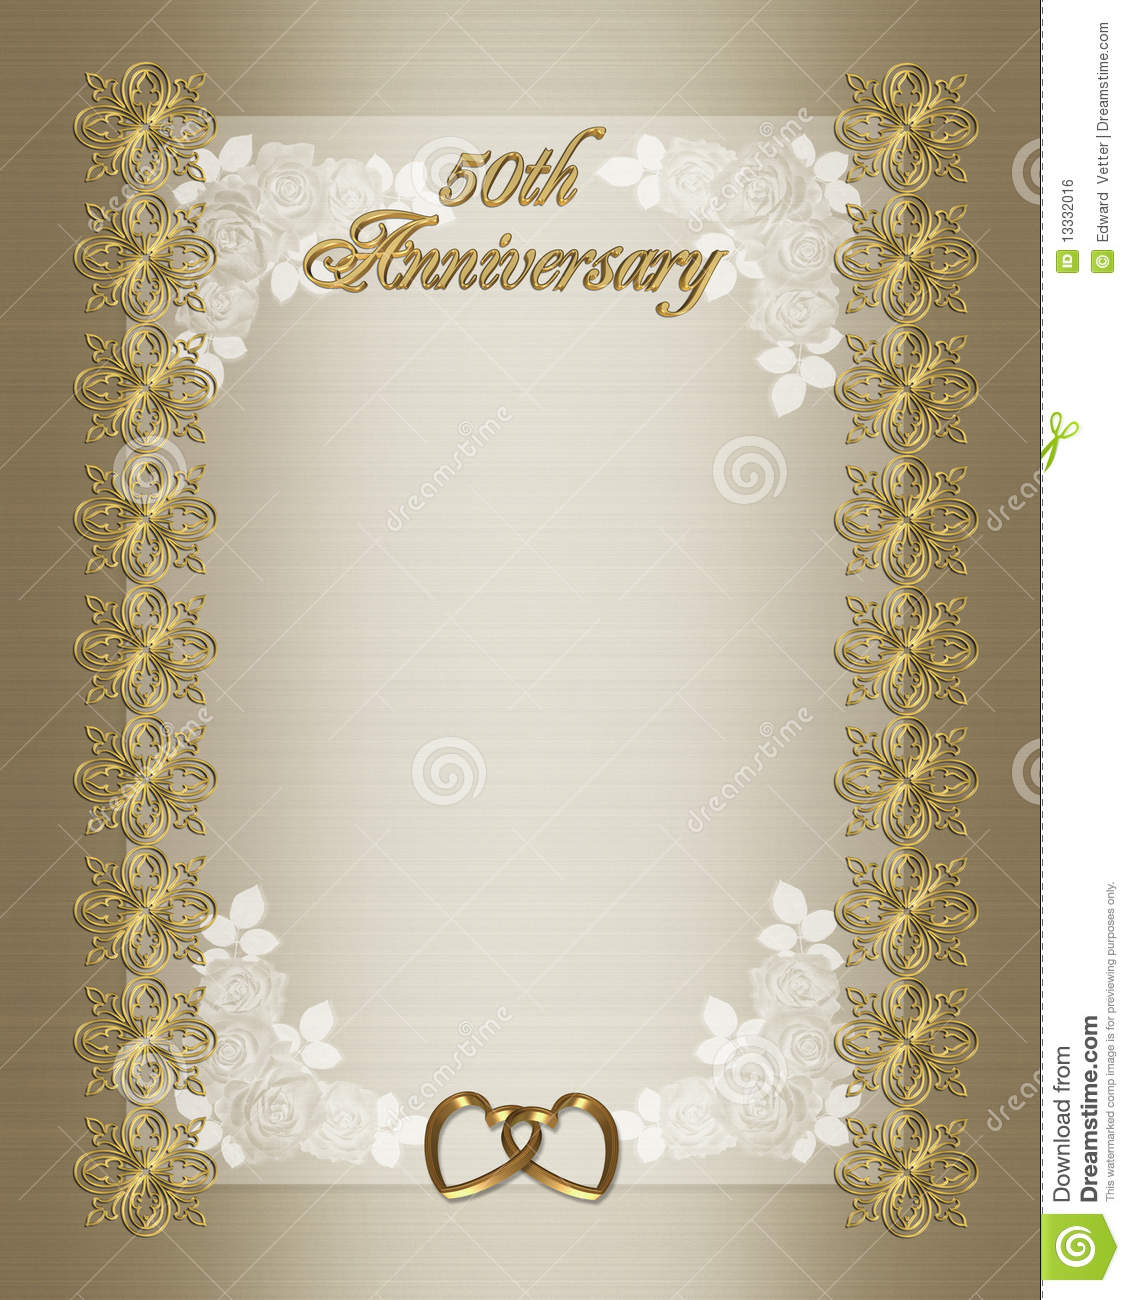 50th Wedding Anniversary Invitation Template Stock Illustration with regard to dimensions 1130 X 1300